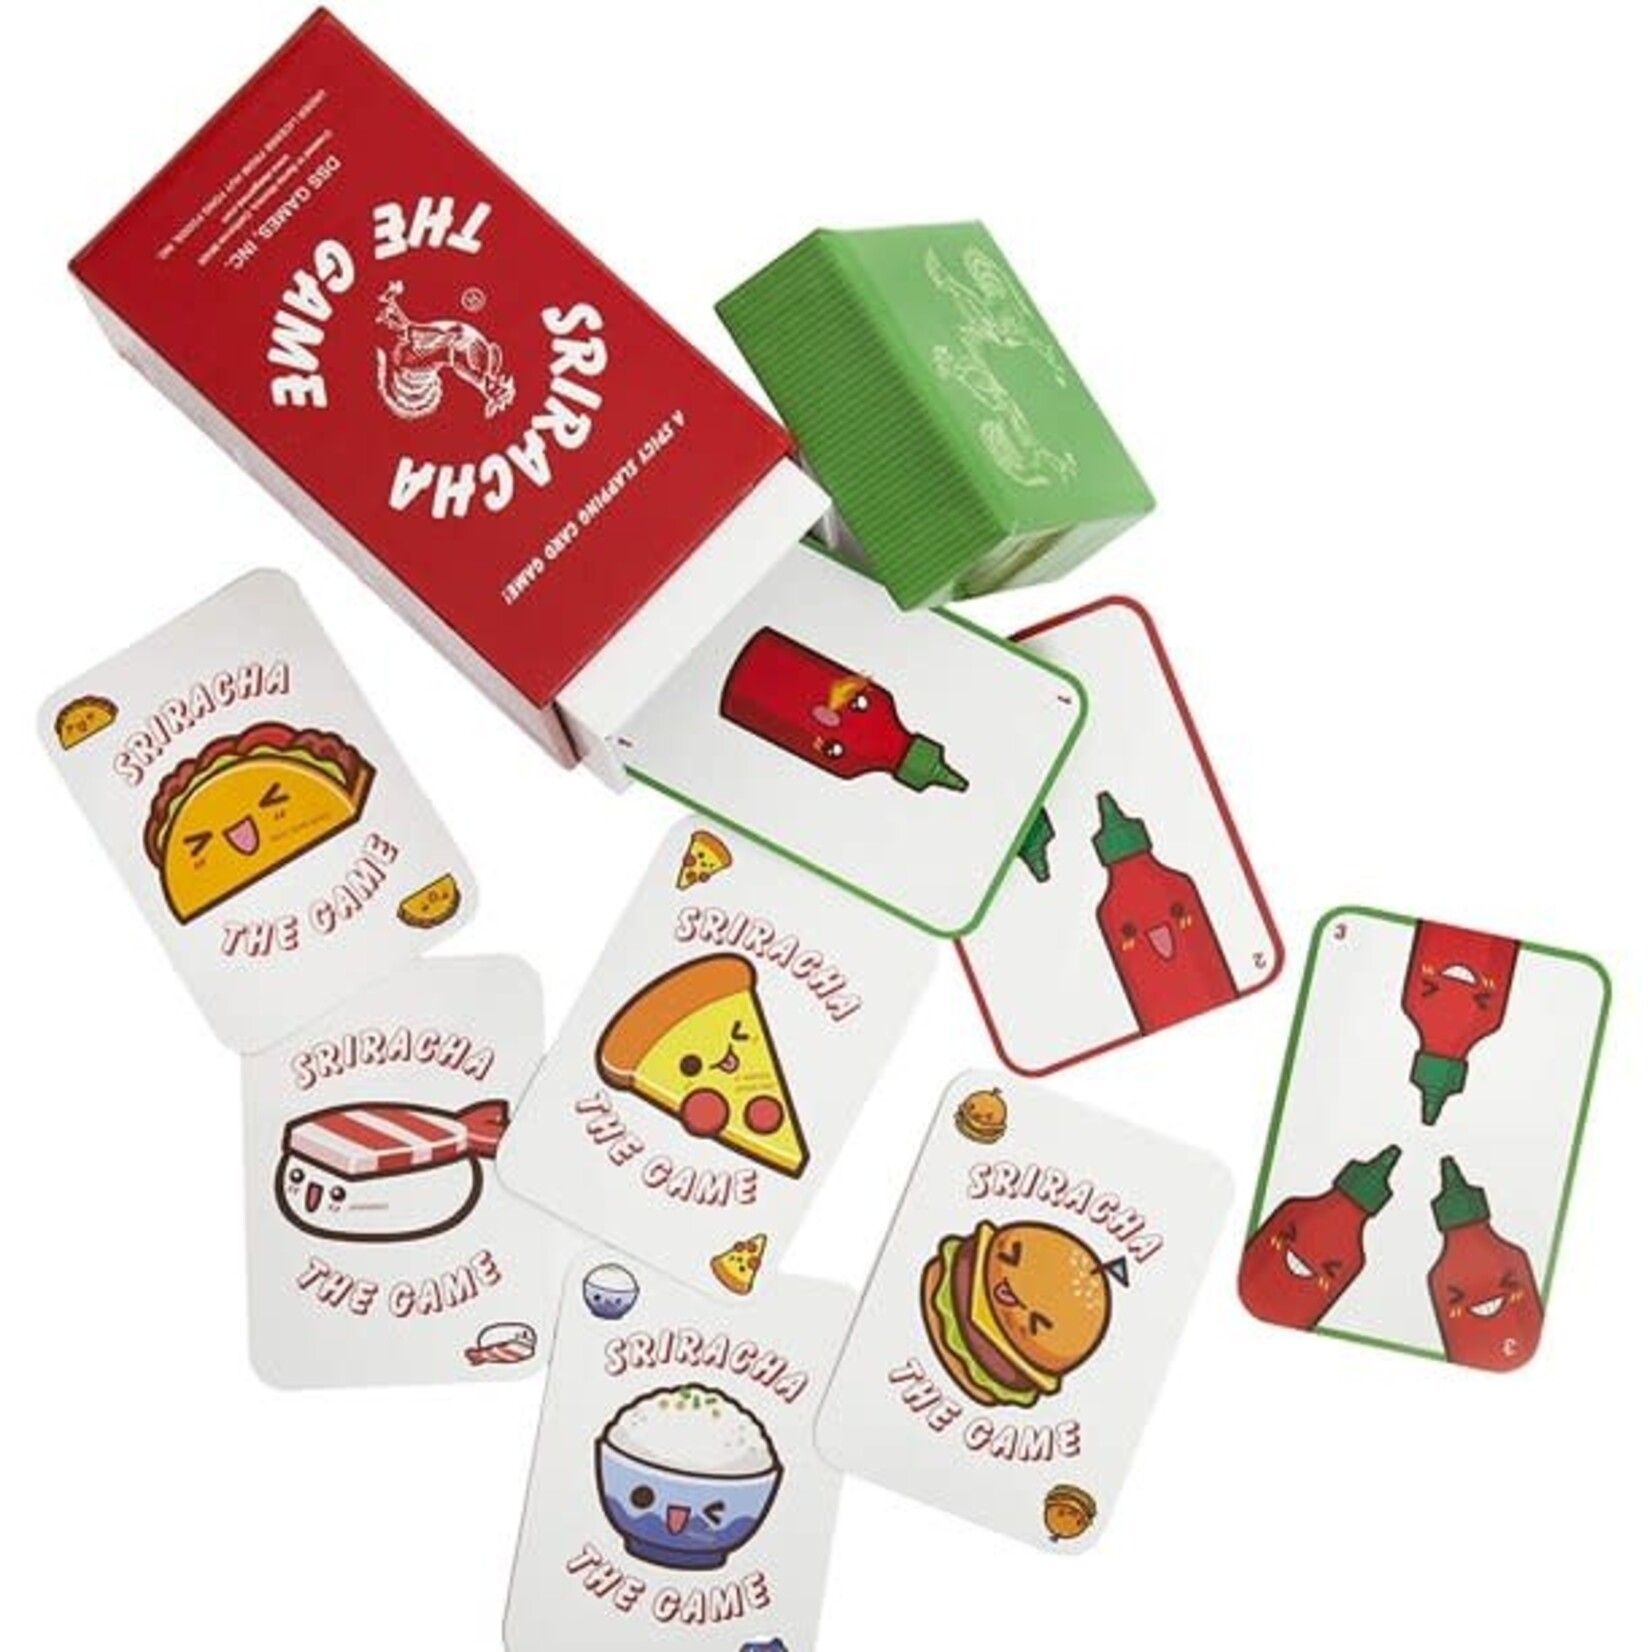 Asmodee Editions Sriracha: The Game!